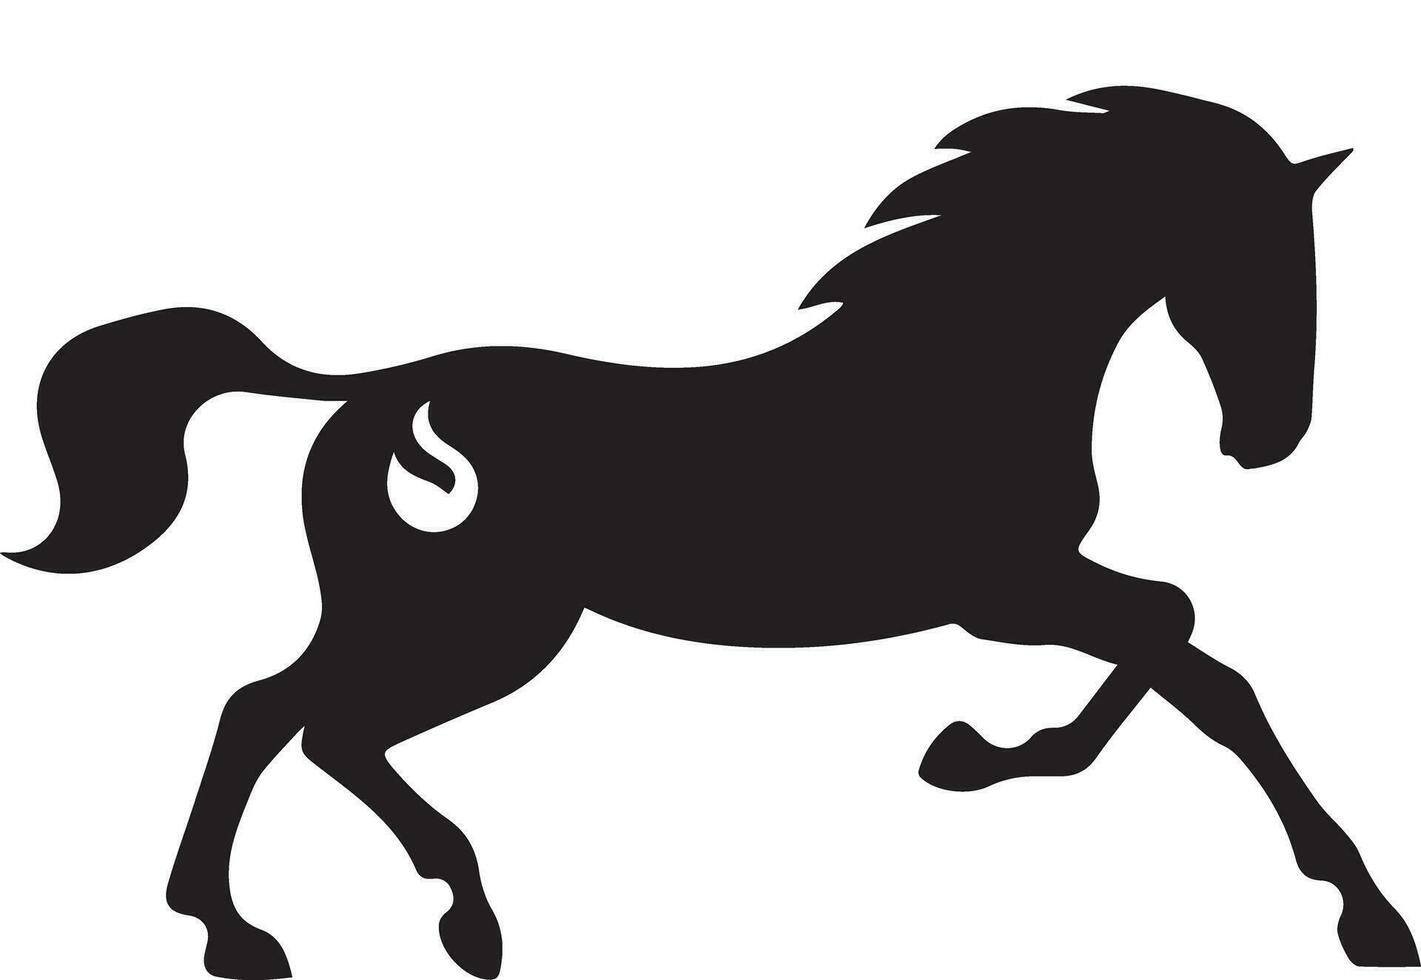 Black silhouette horse vector